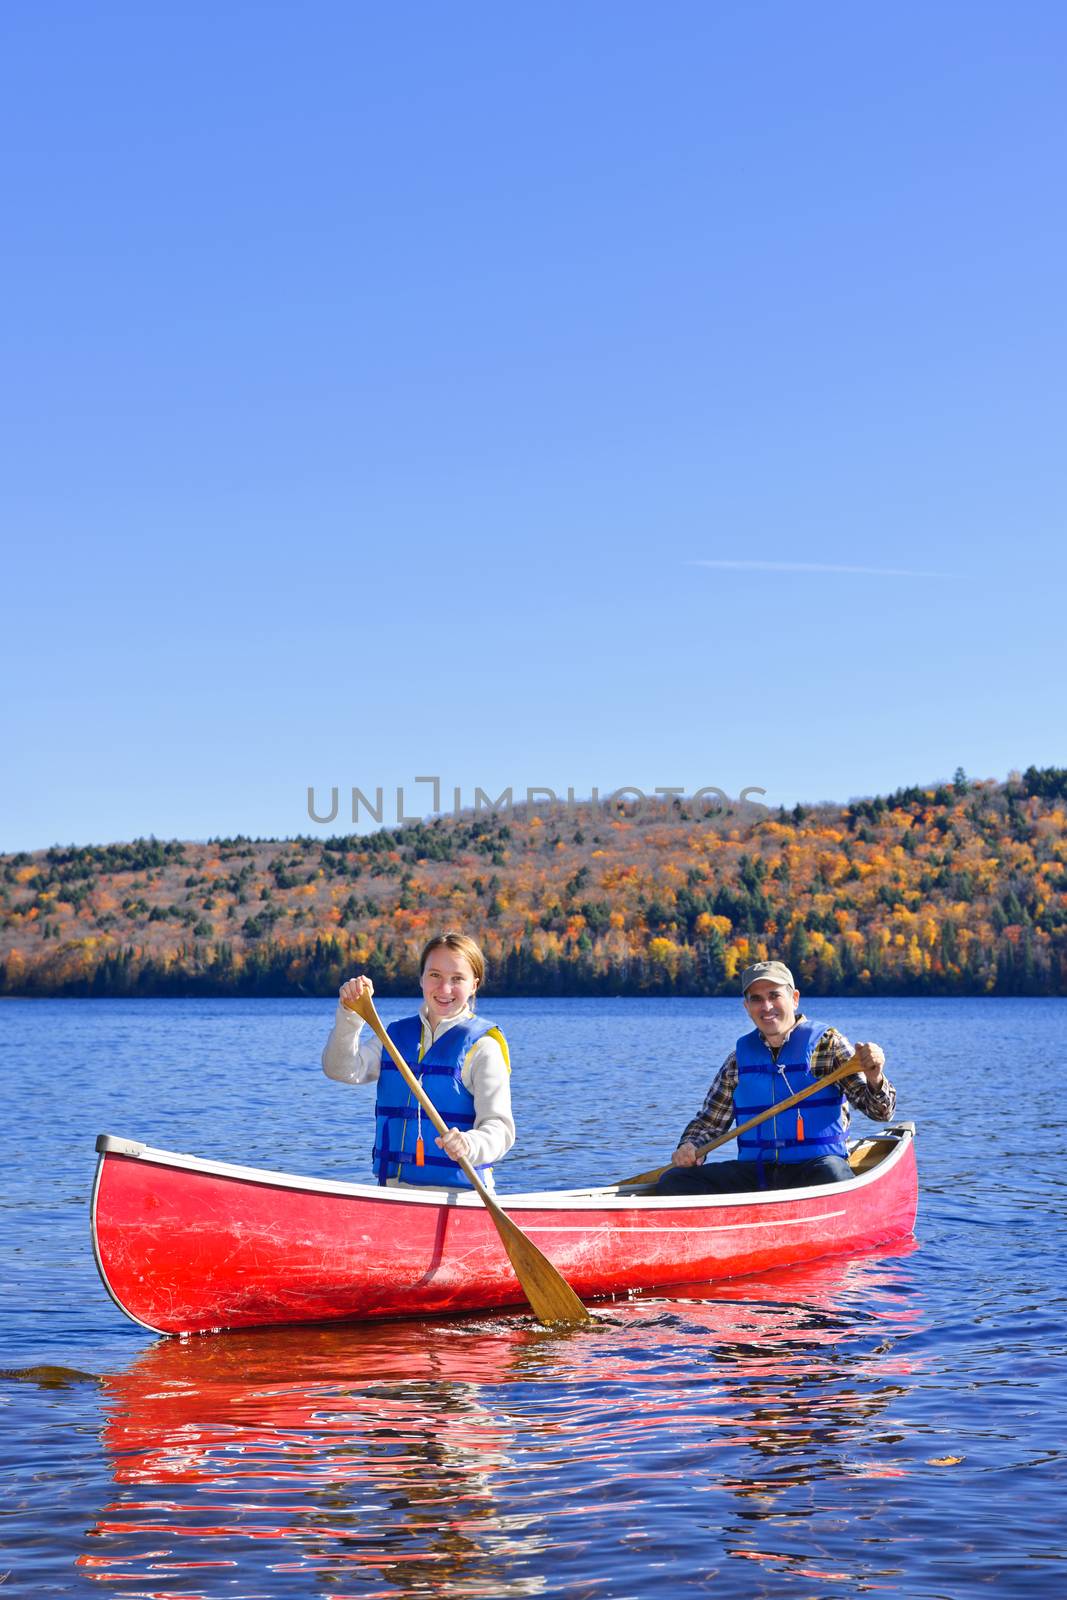 Canoe trip on scenic lake in fall by elenathewise